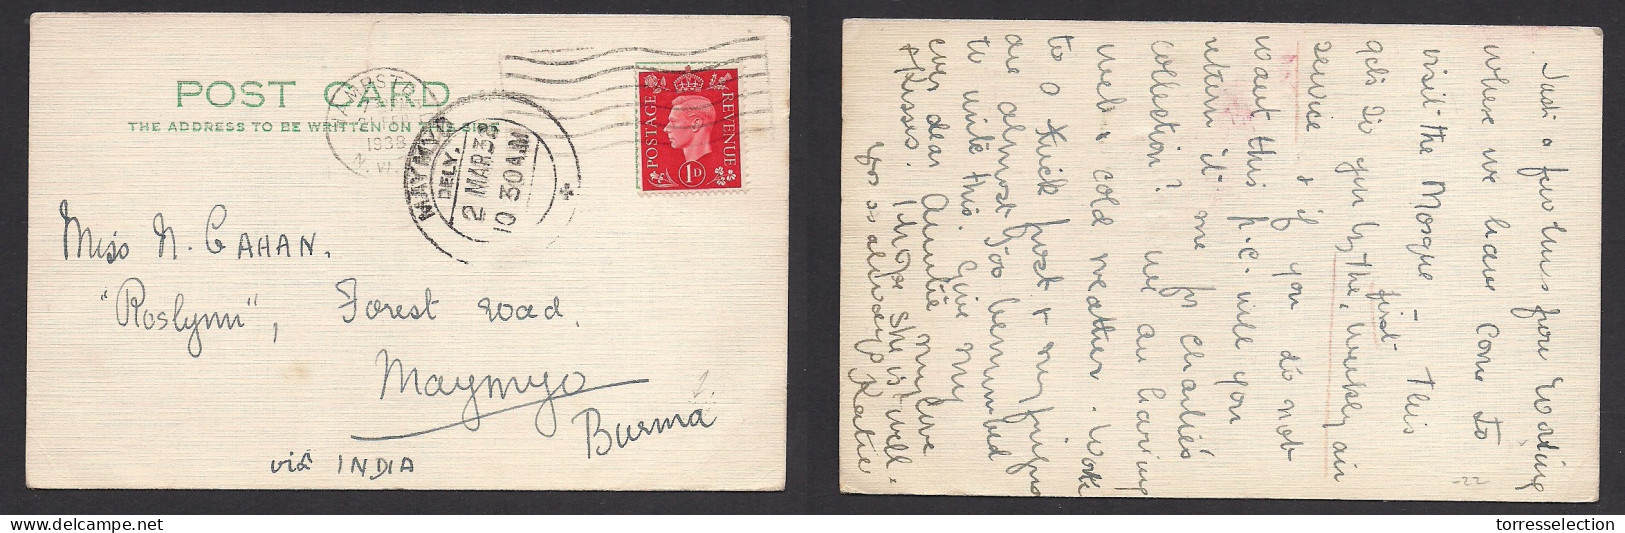 Great Britain - XX. 1938 (21 Febr) Hampstead - Burma, MayMyo (2 March) Via India. 1d Red Private Comercial Fkd Card. XSA - ...-1840 Precursores